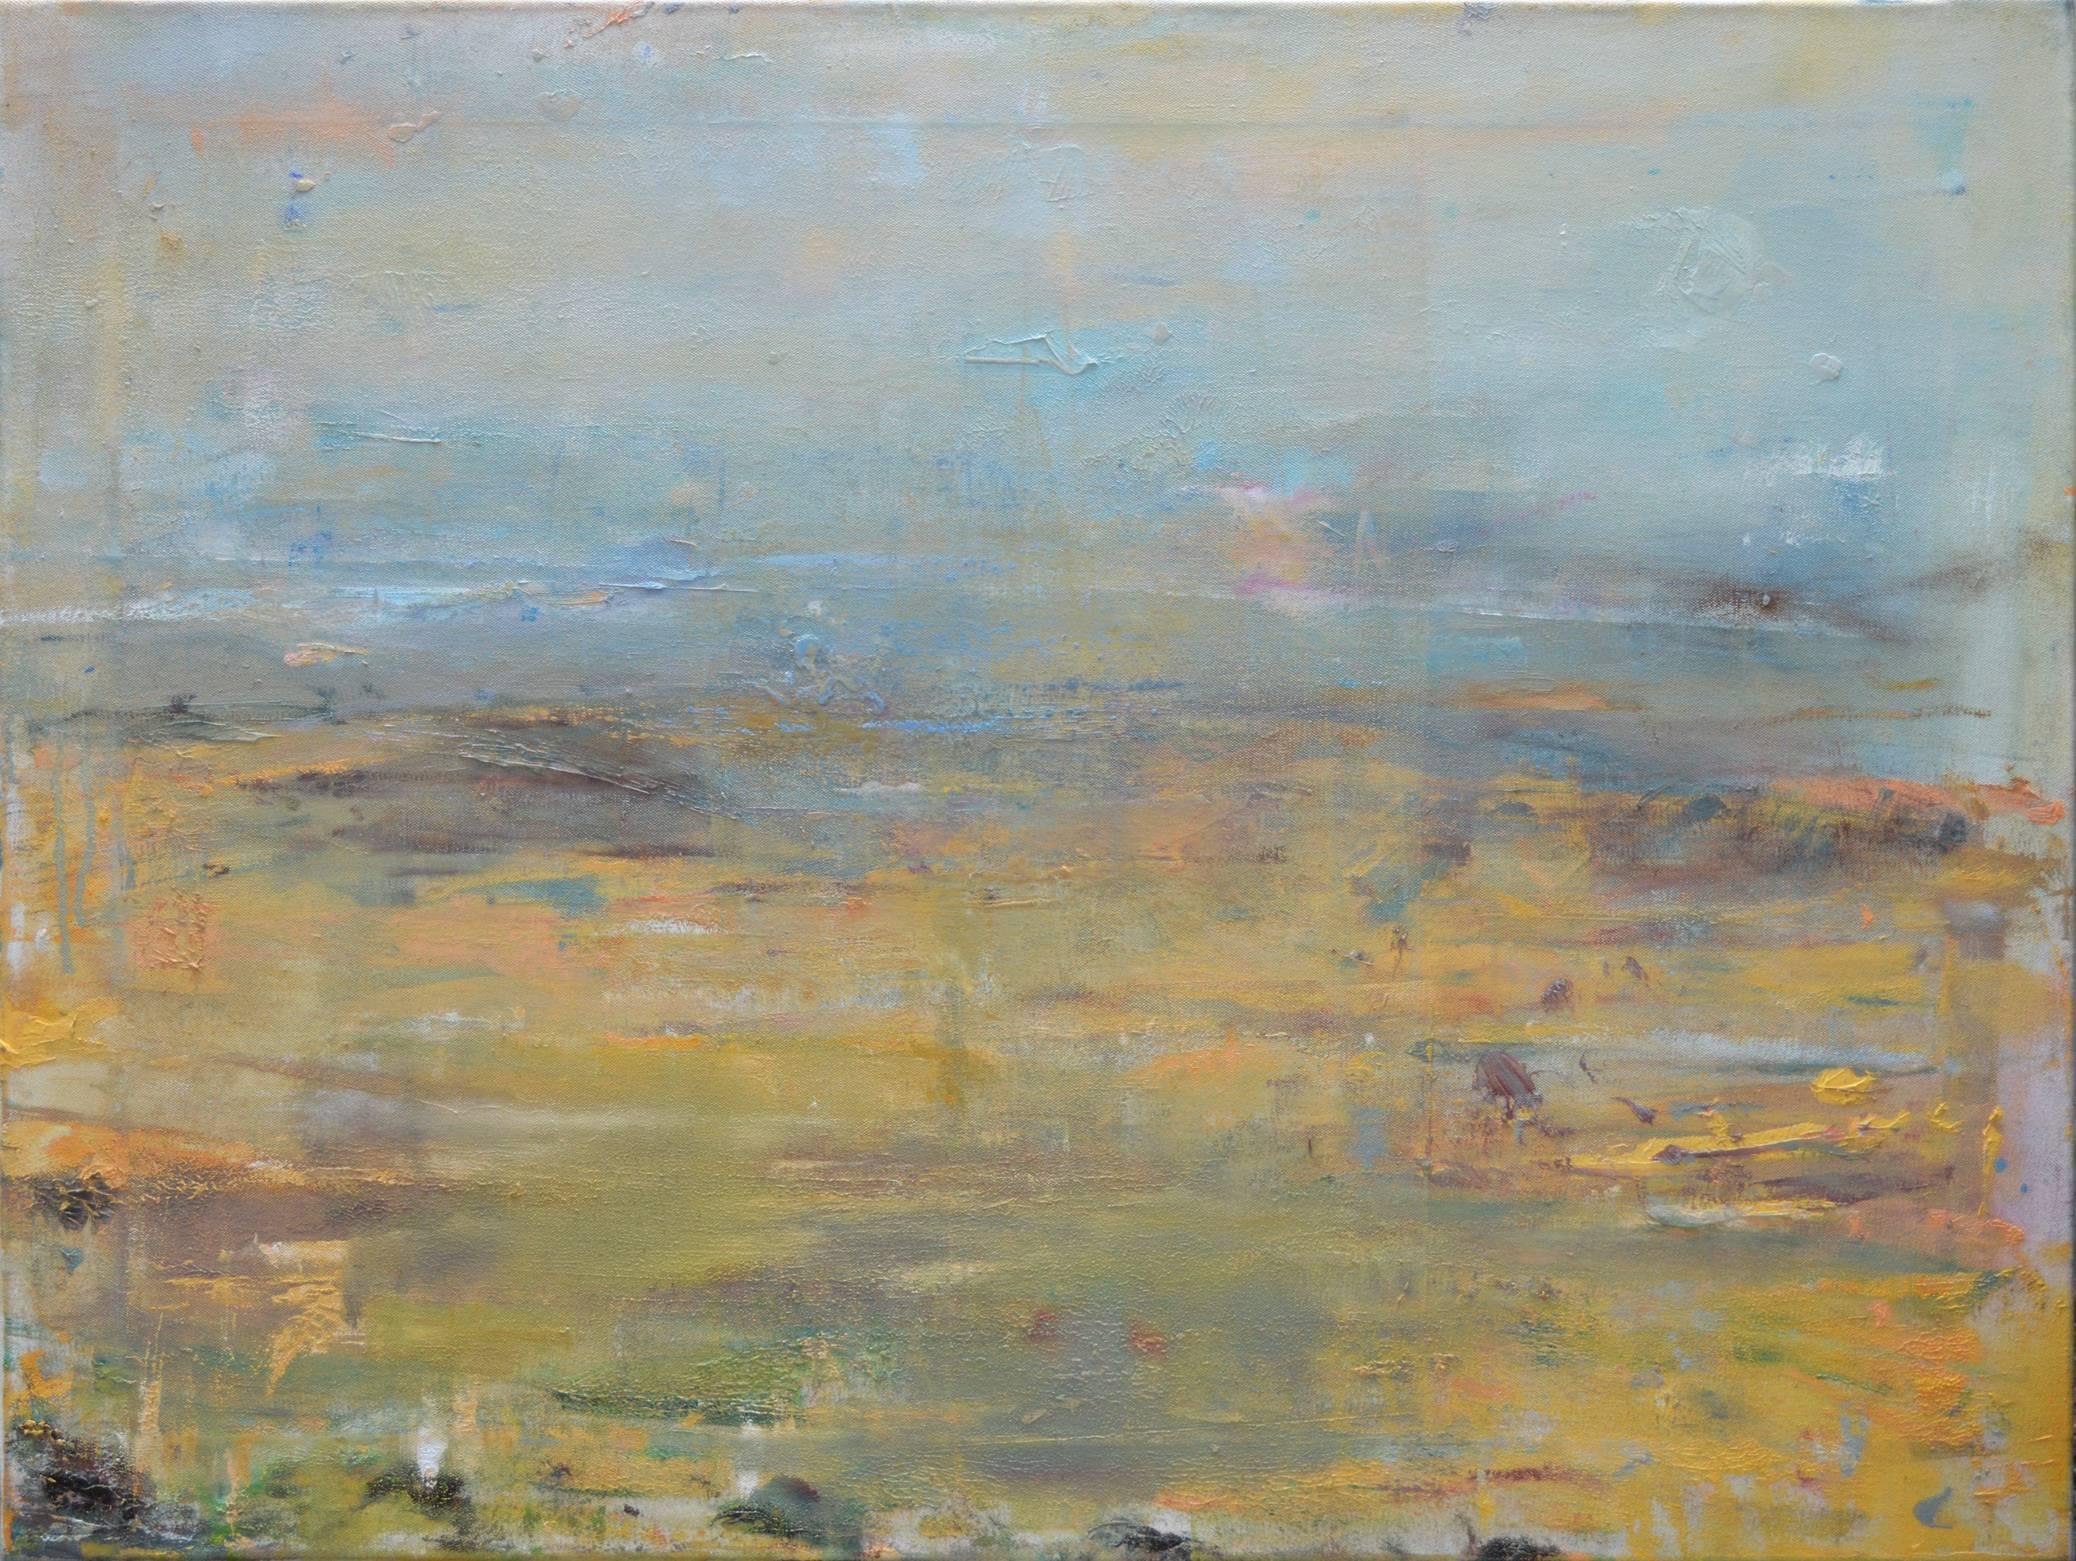 Gloria Sáez Landscape Painting - Gloria Saez, "Valle Ambles - Ambles Valley", Oil on canvas, 2017